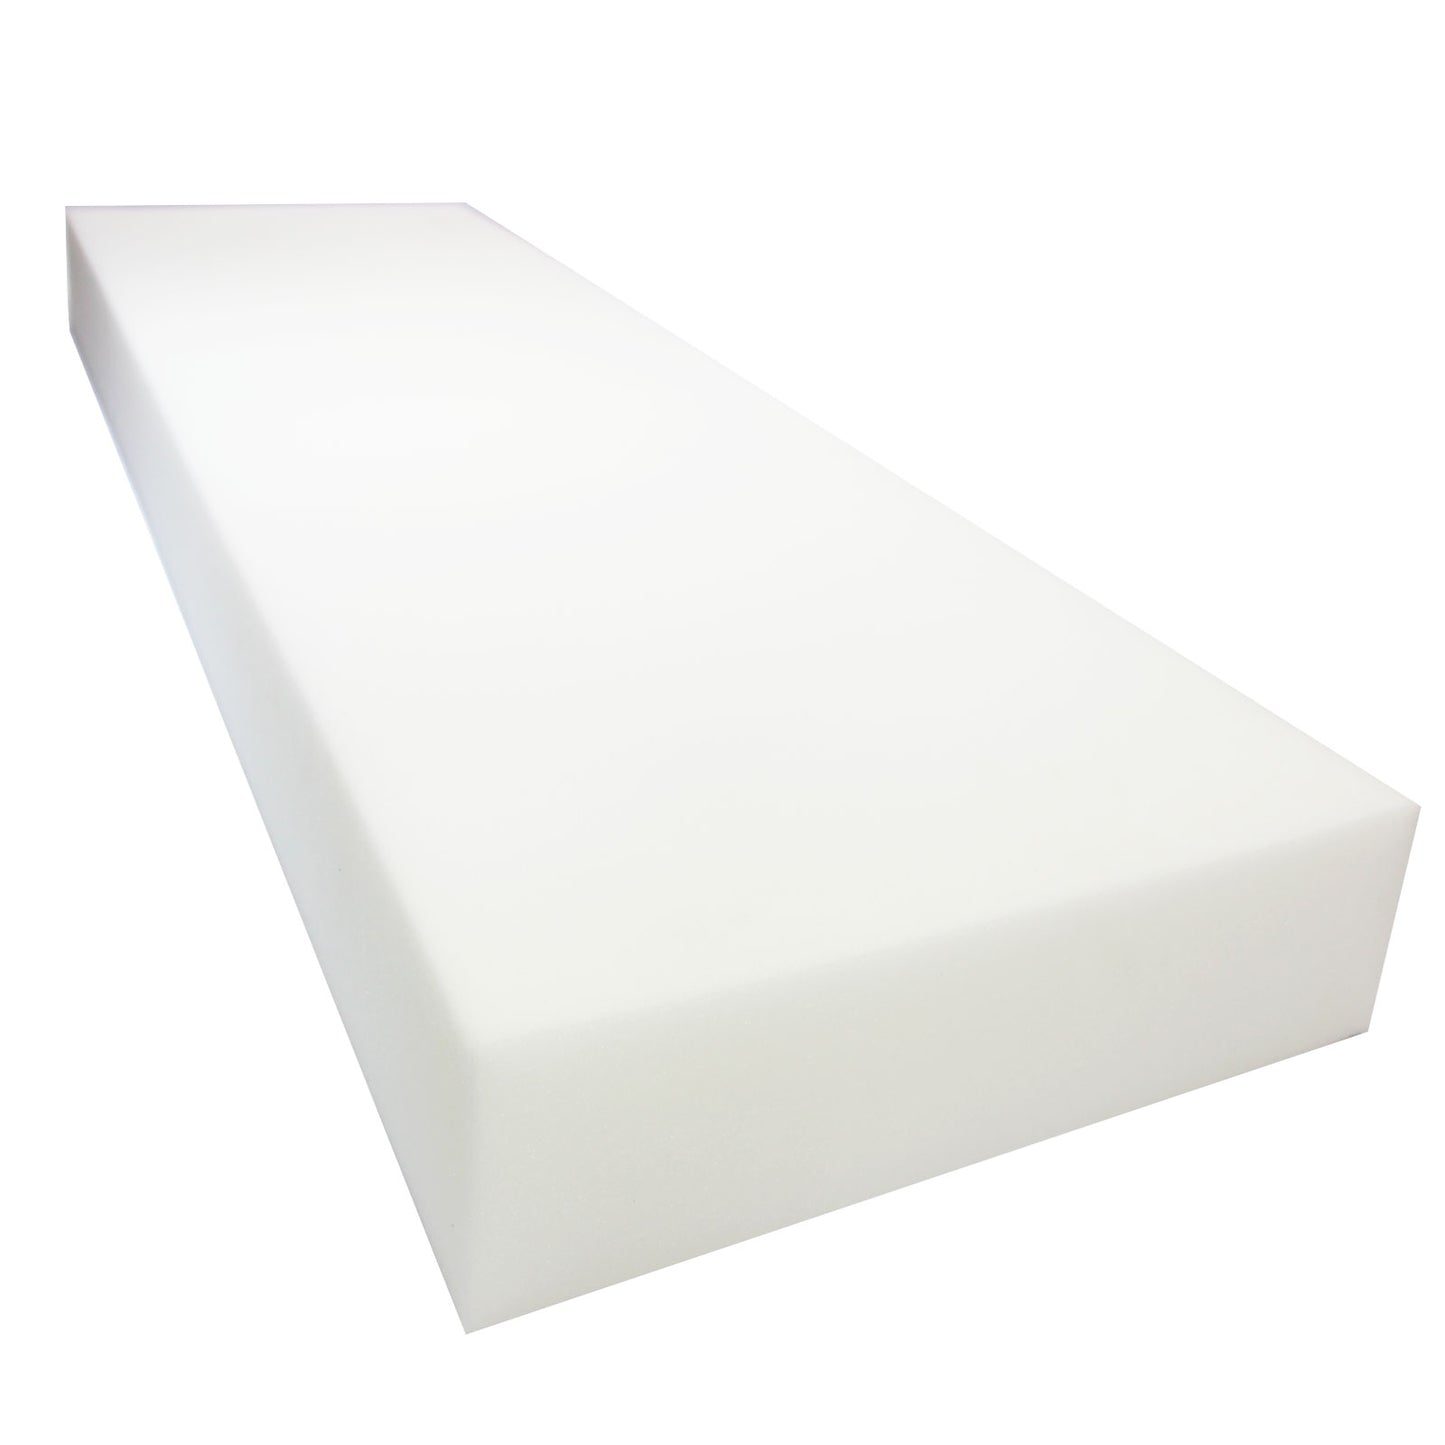 Mybecca 5" x 24" x 24" High Density Upholstery Foam Cushion (Seat Replacement, Upholstery Sheet, Foam Padding)